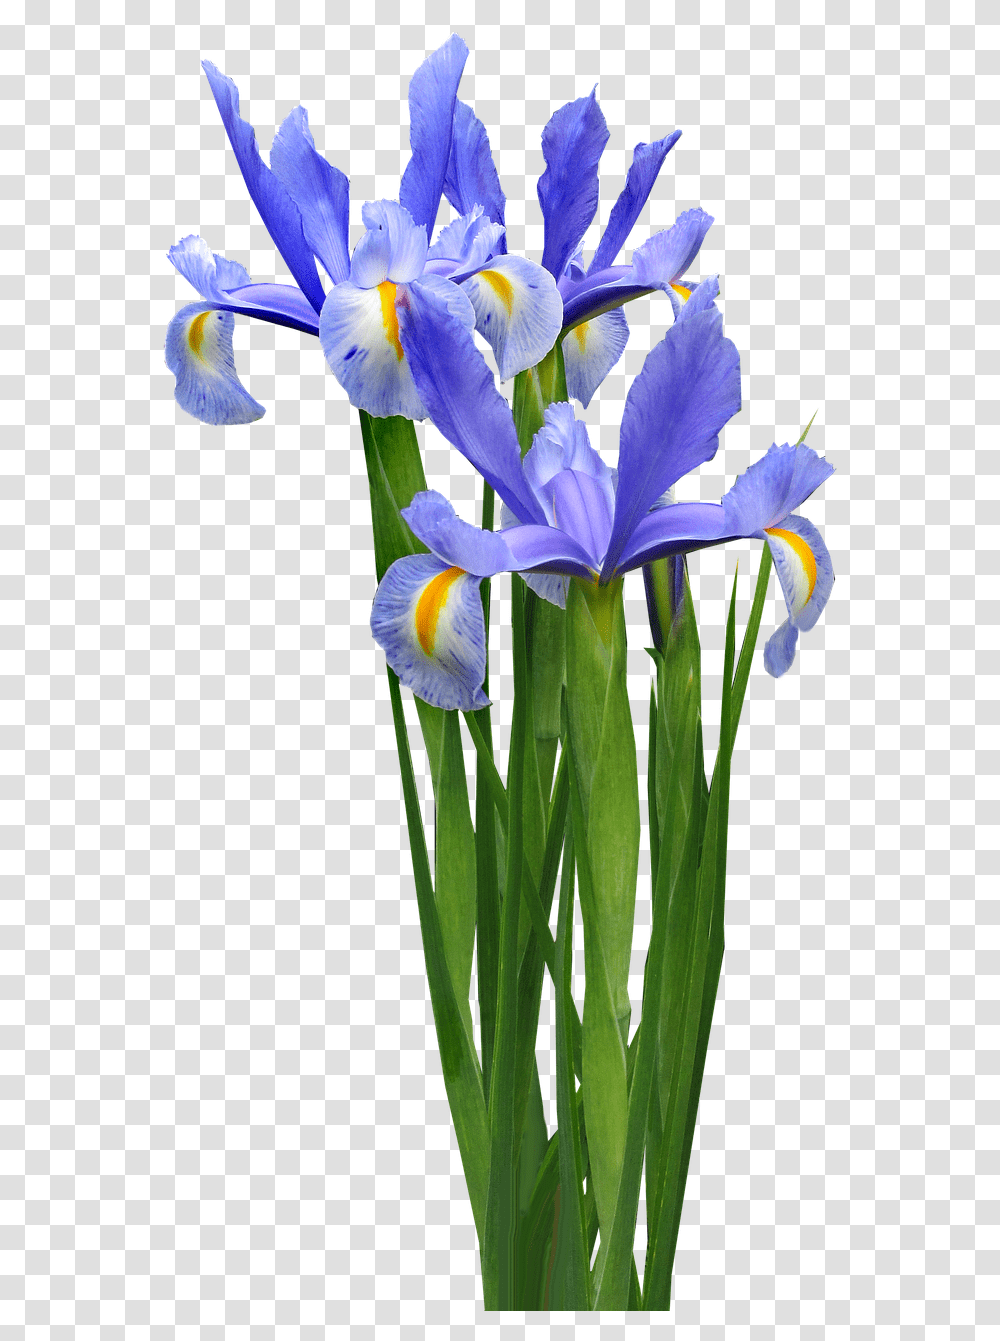 Iris Flower Image Iris Flower, Plant, Blossom, Petal, Anther Transparent Png